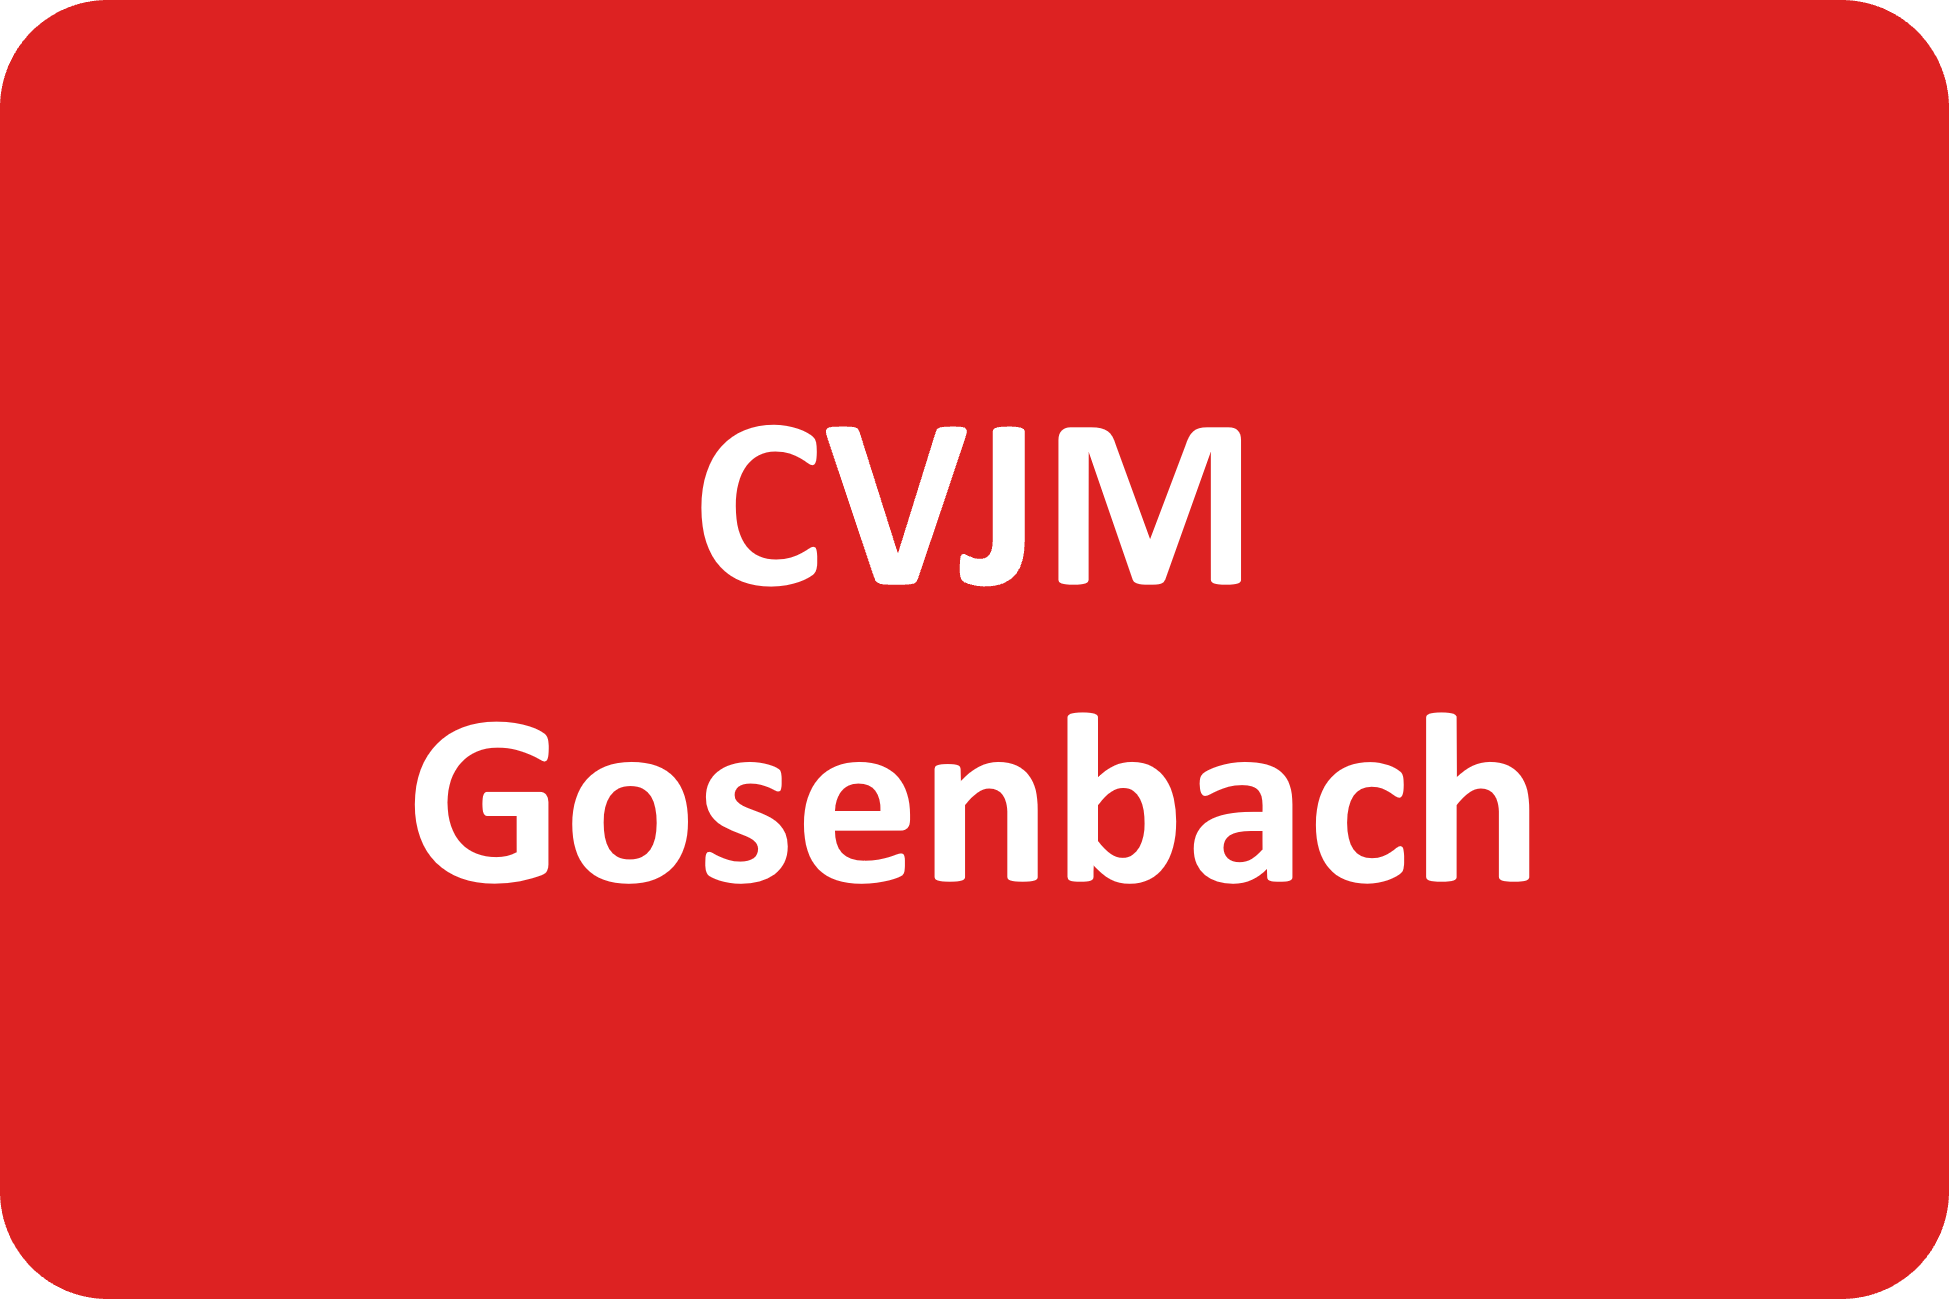 CVJM Gosenbach